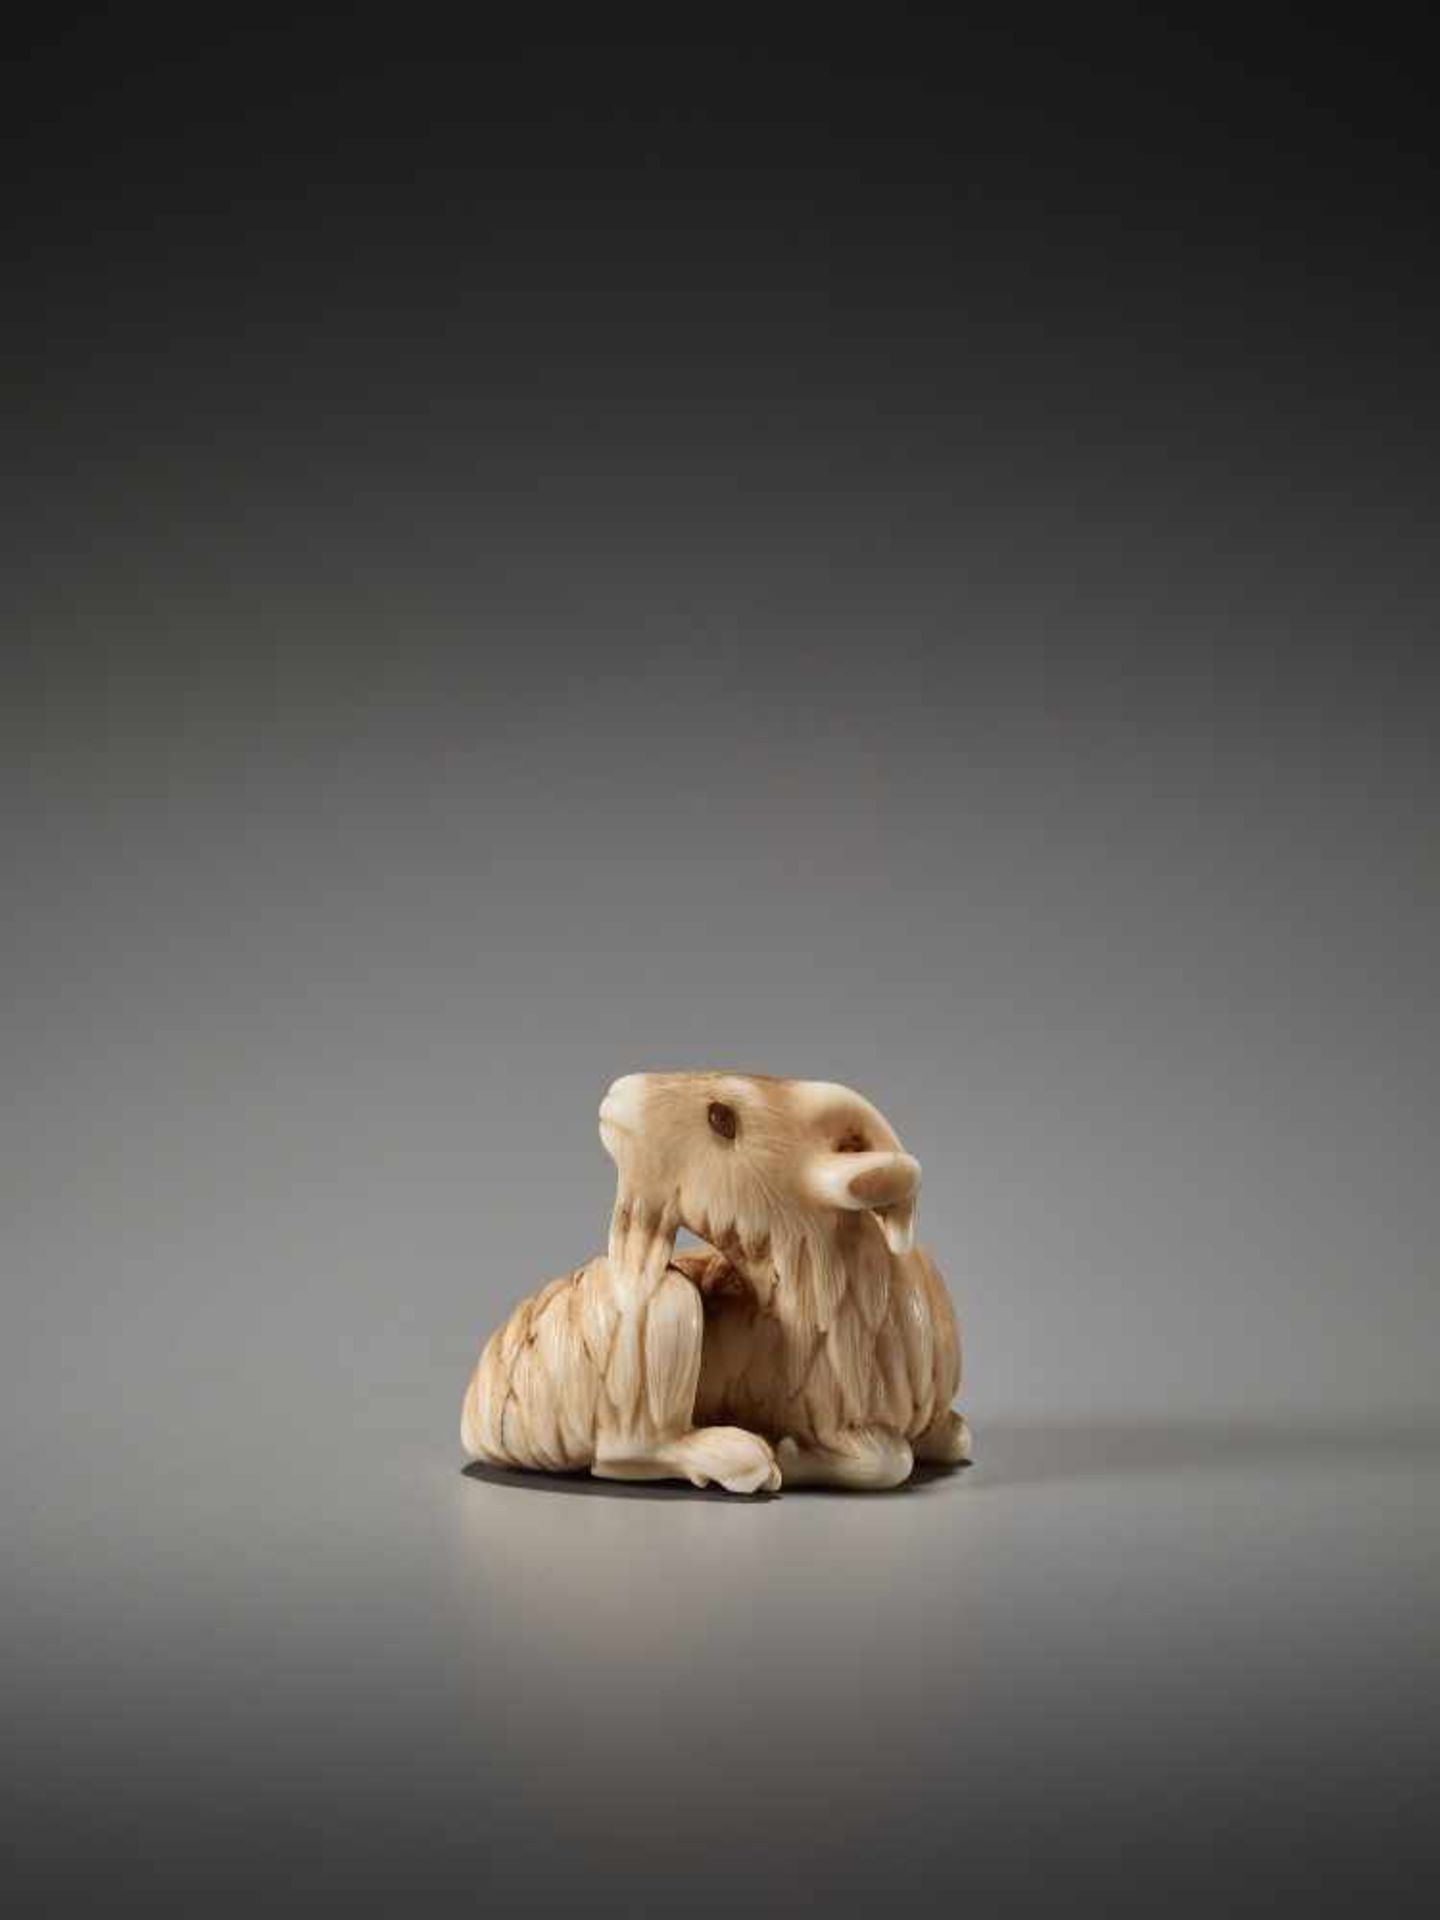 AN IVORY NETSUKE OF A RECUMBENT GOAT ATTRIBUTED TO RANMEIUnsigned, attributed to Ranmei, ivory